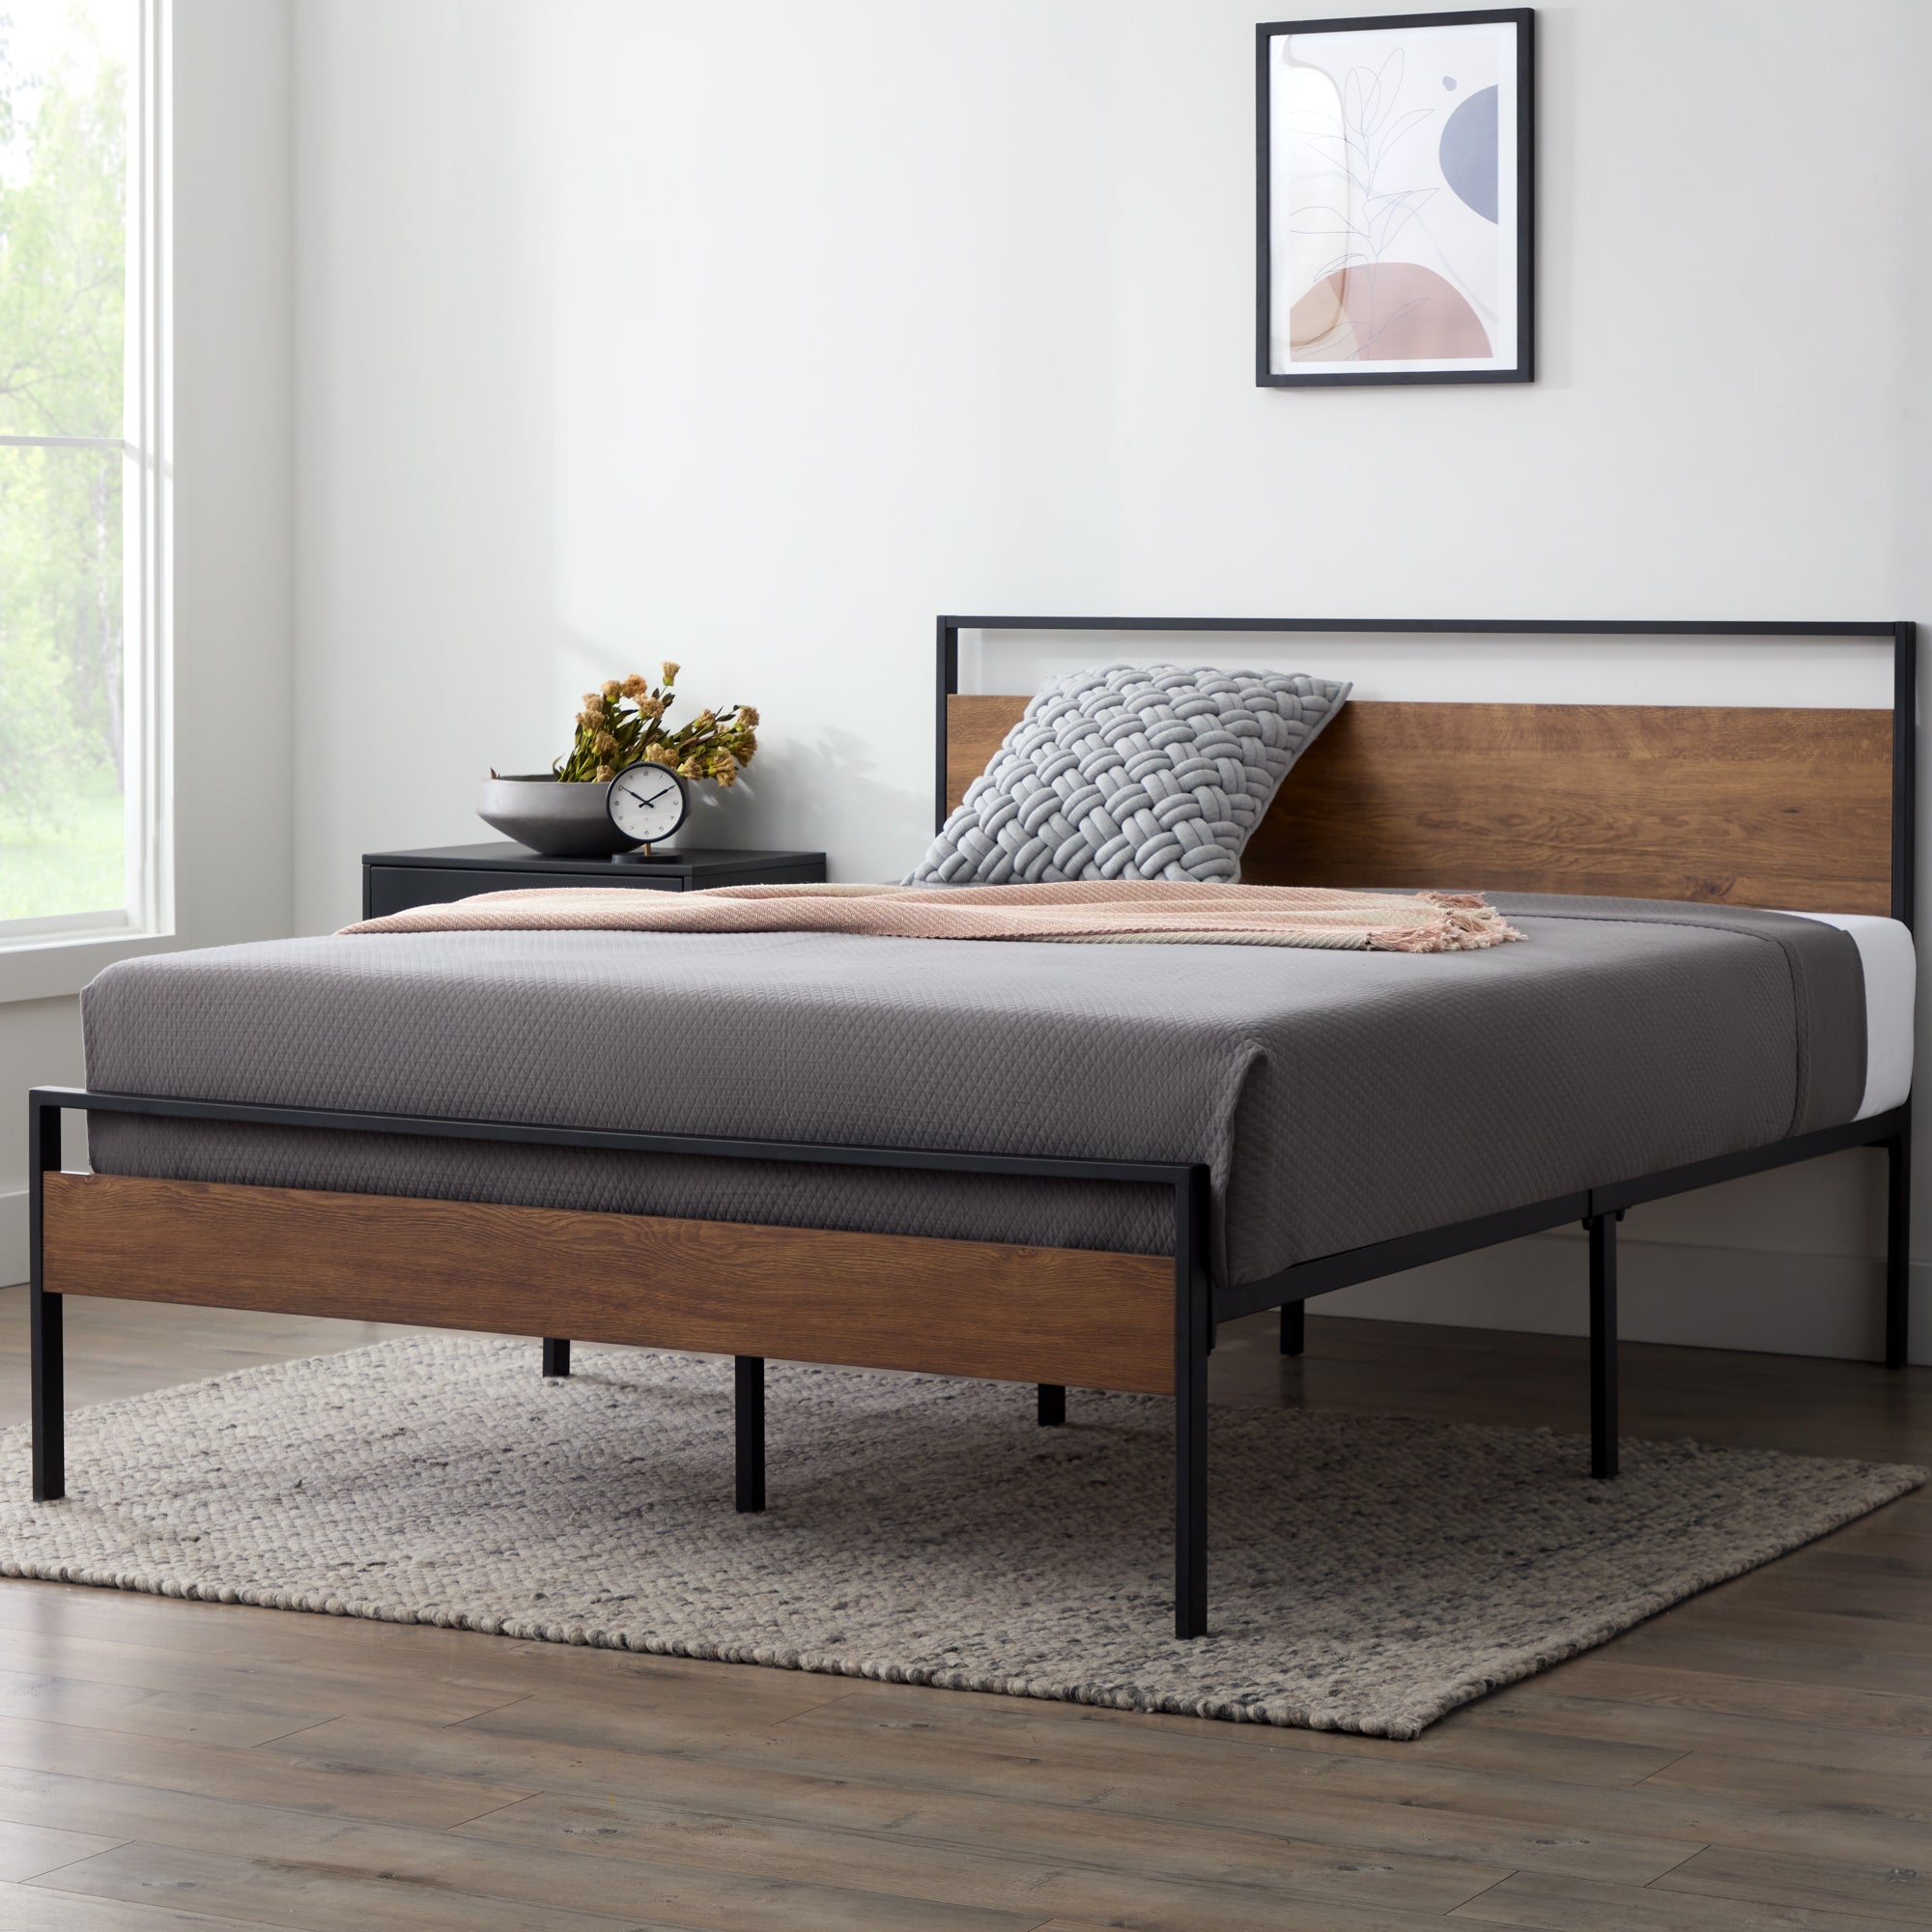 Thompson Metal and Wood Platform Bed